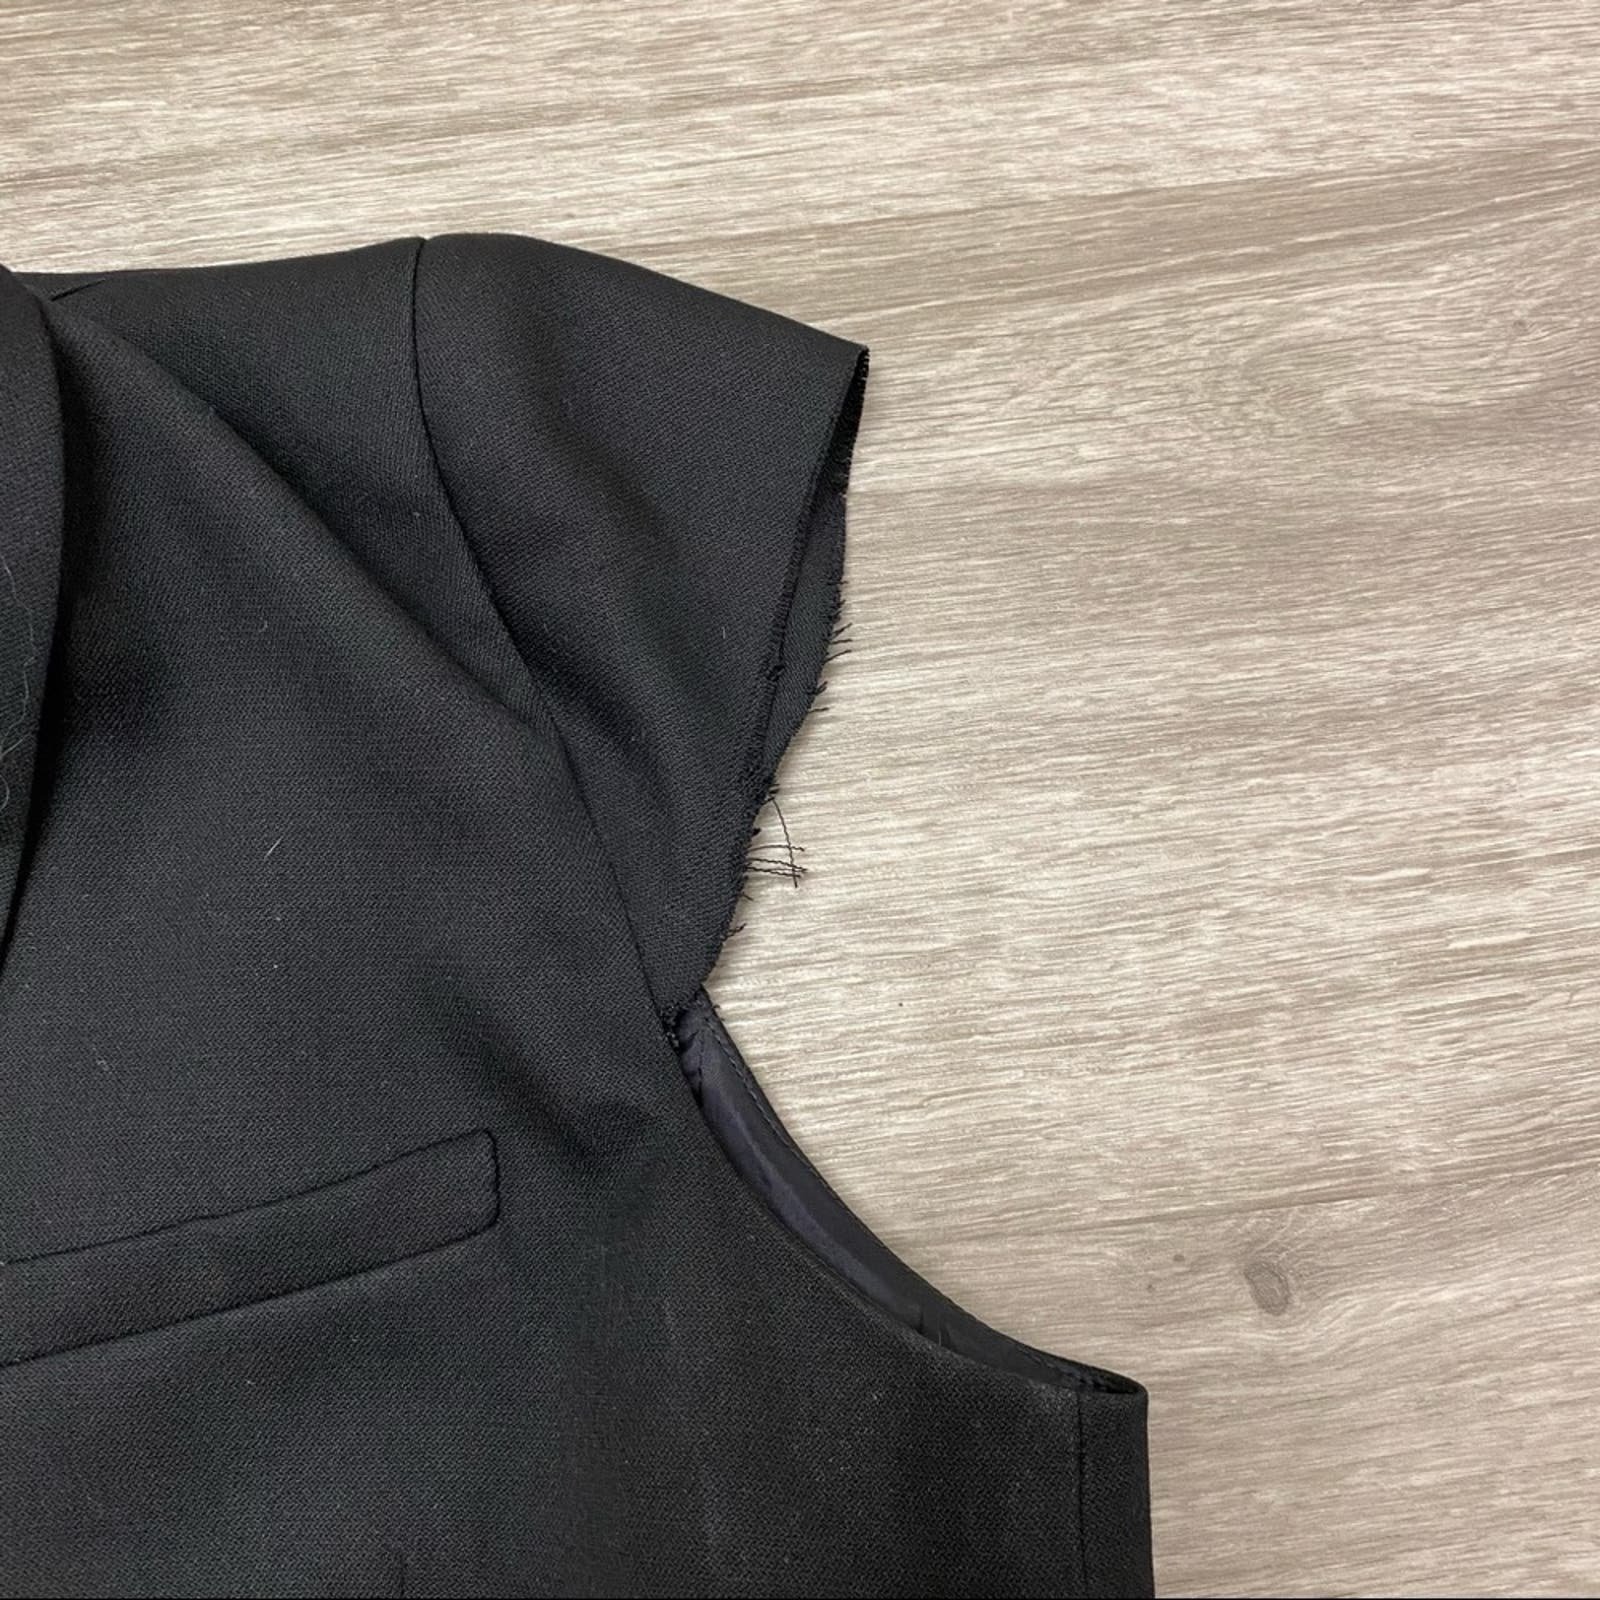 The Best Seller Helmut Lang Asymmetrical Hem Raw Hem Sleeve Vest Black 12 o2AtX8ikf just for you